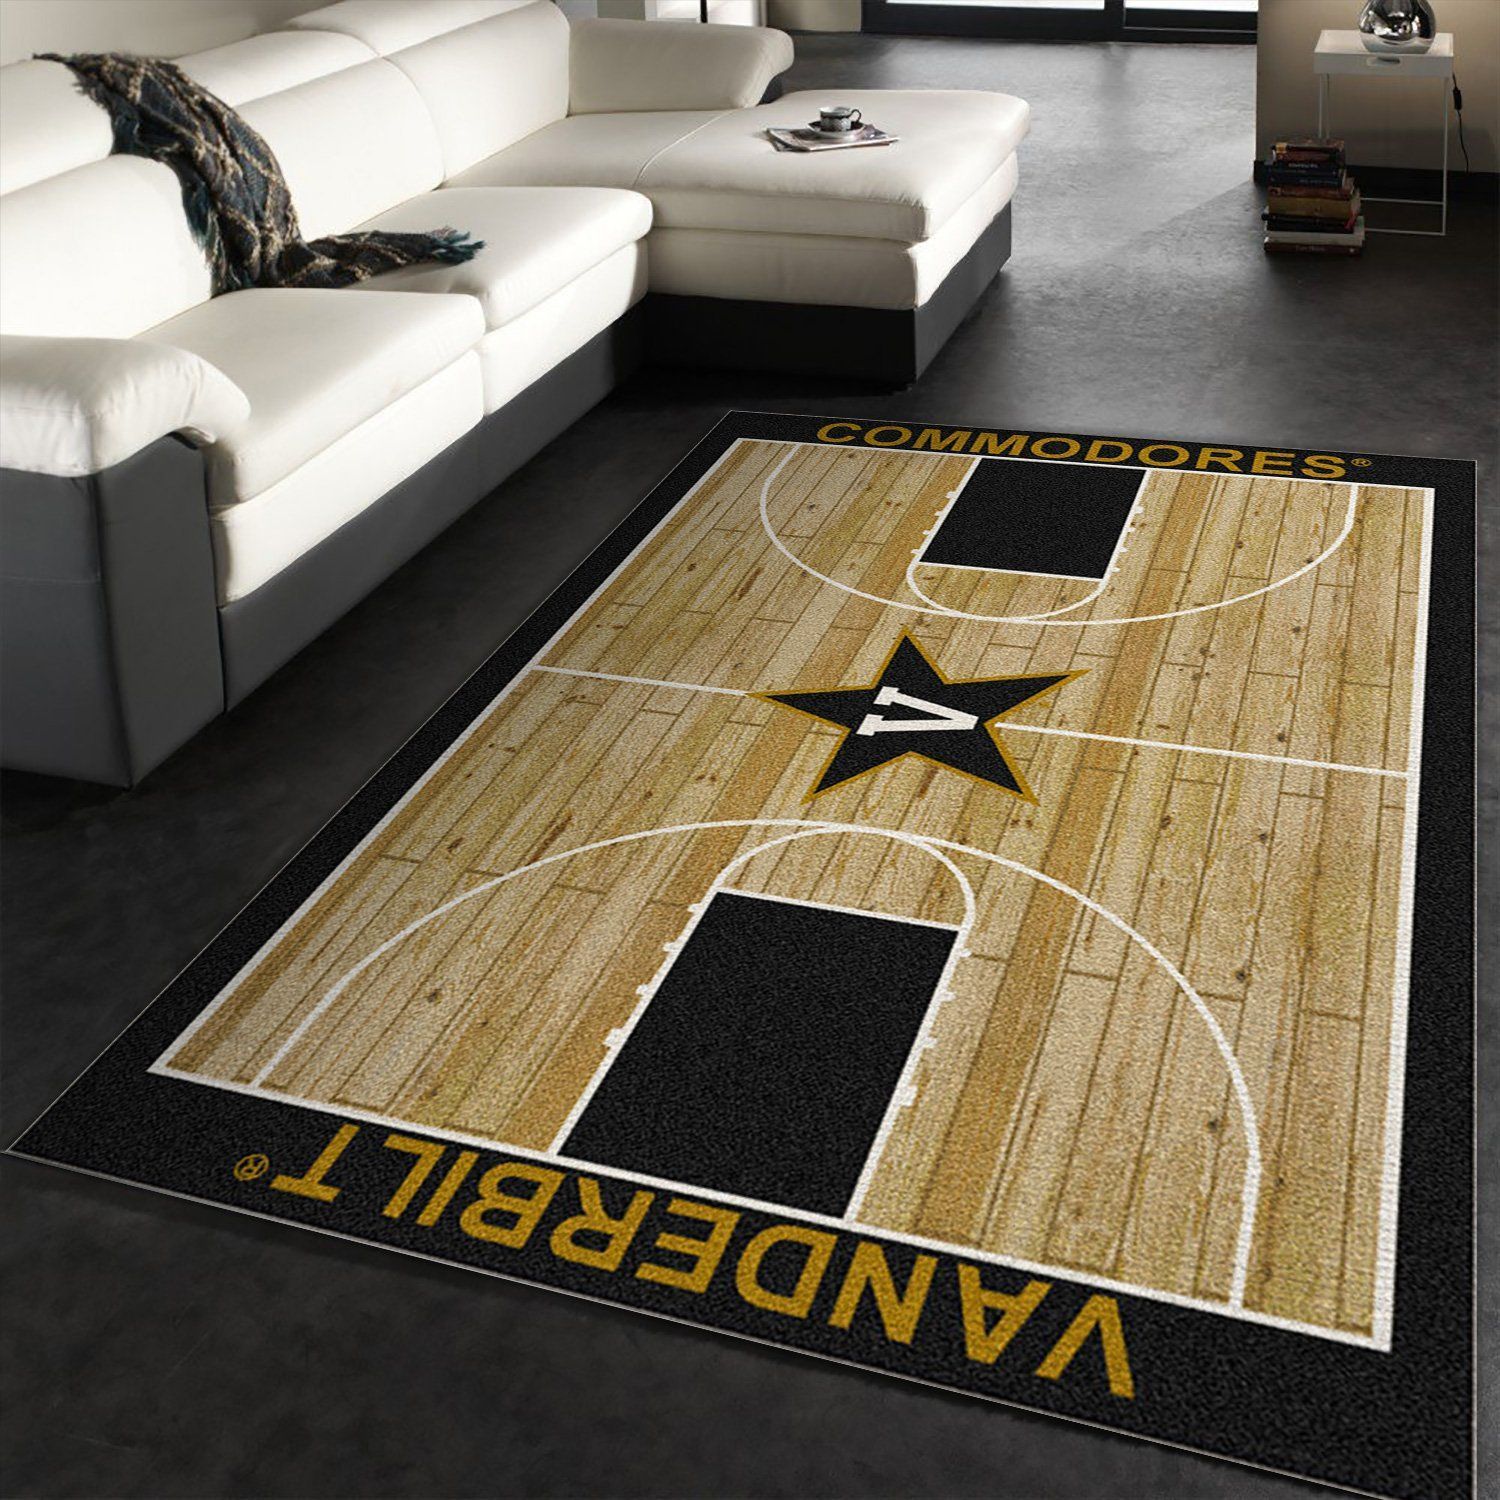 College Home Court Vanderbilt Basketball Team Logo Area Rug, Kitchen Rug, Home Decor Floor Decor - Indoor Outdoor Rugs